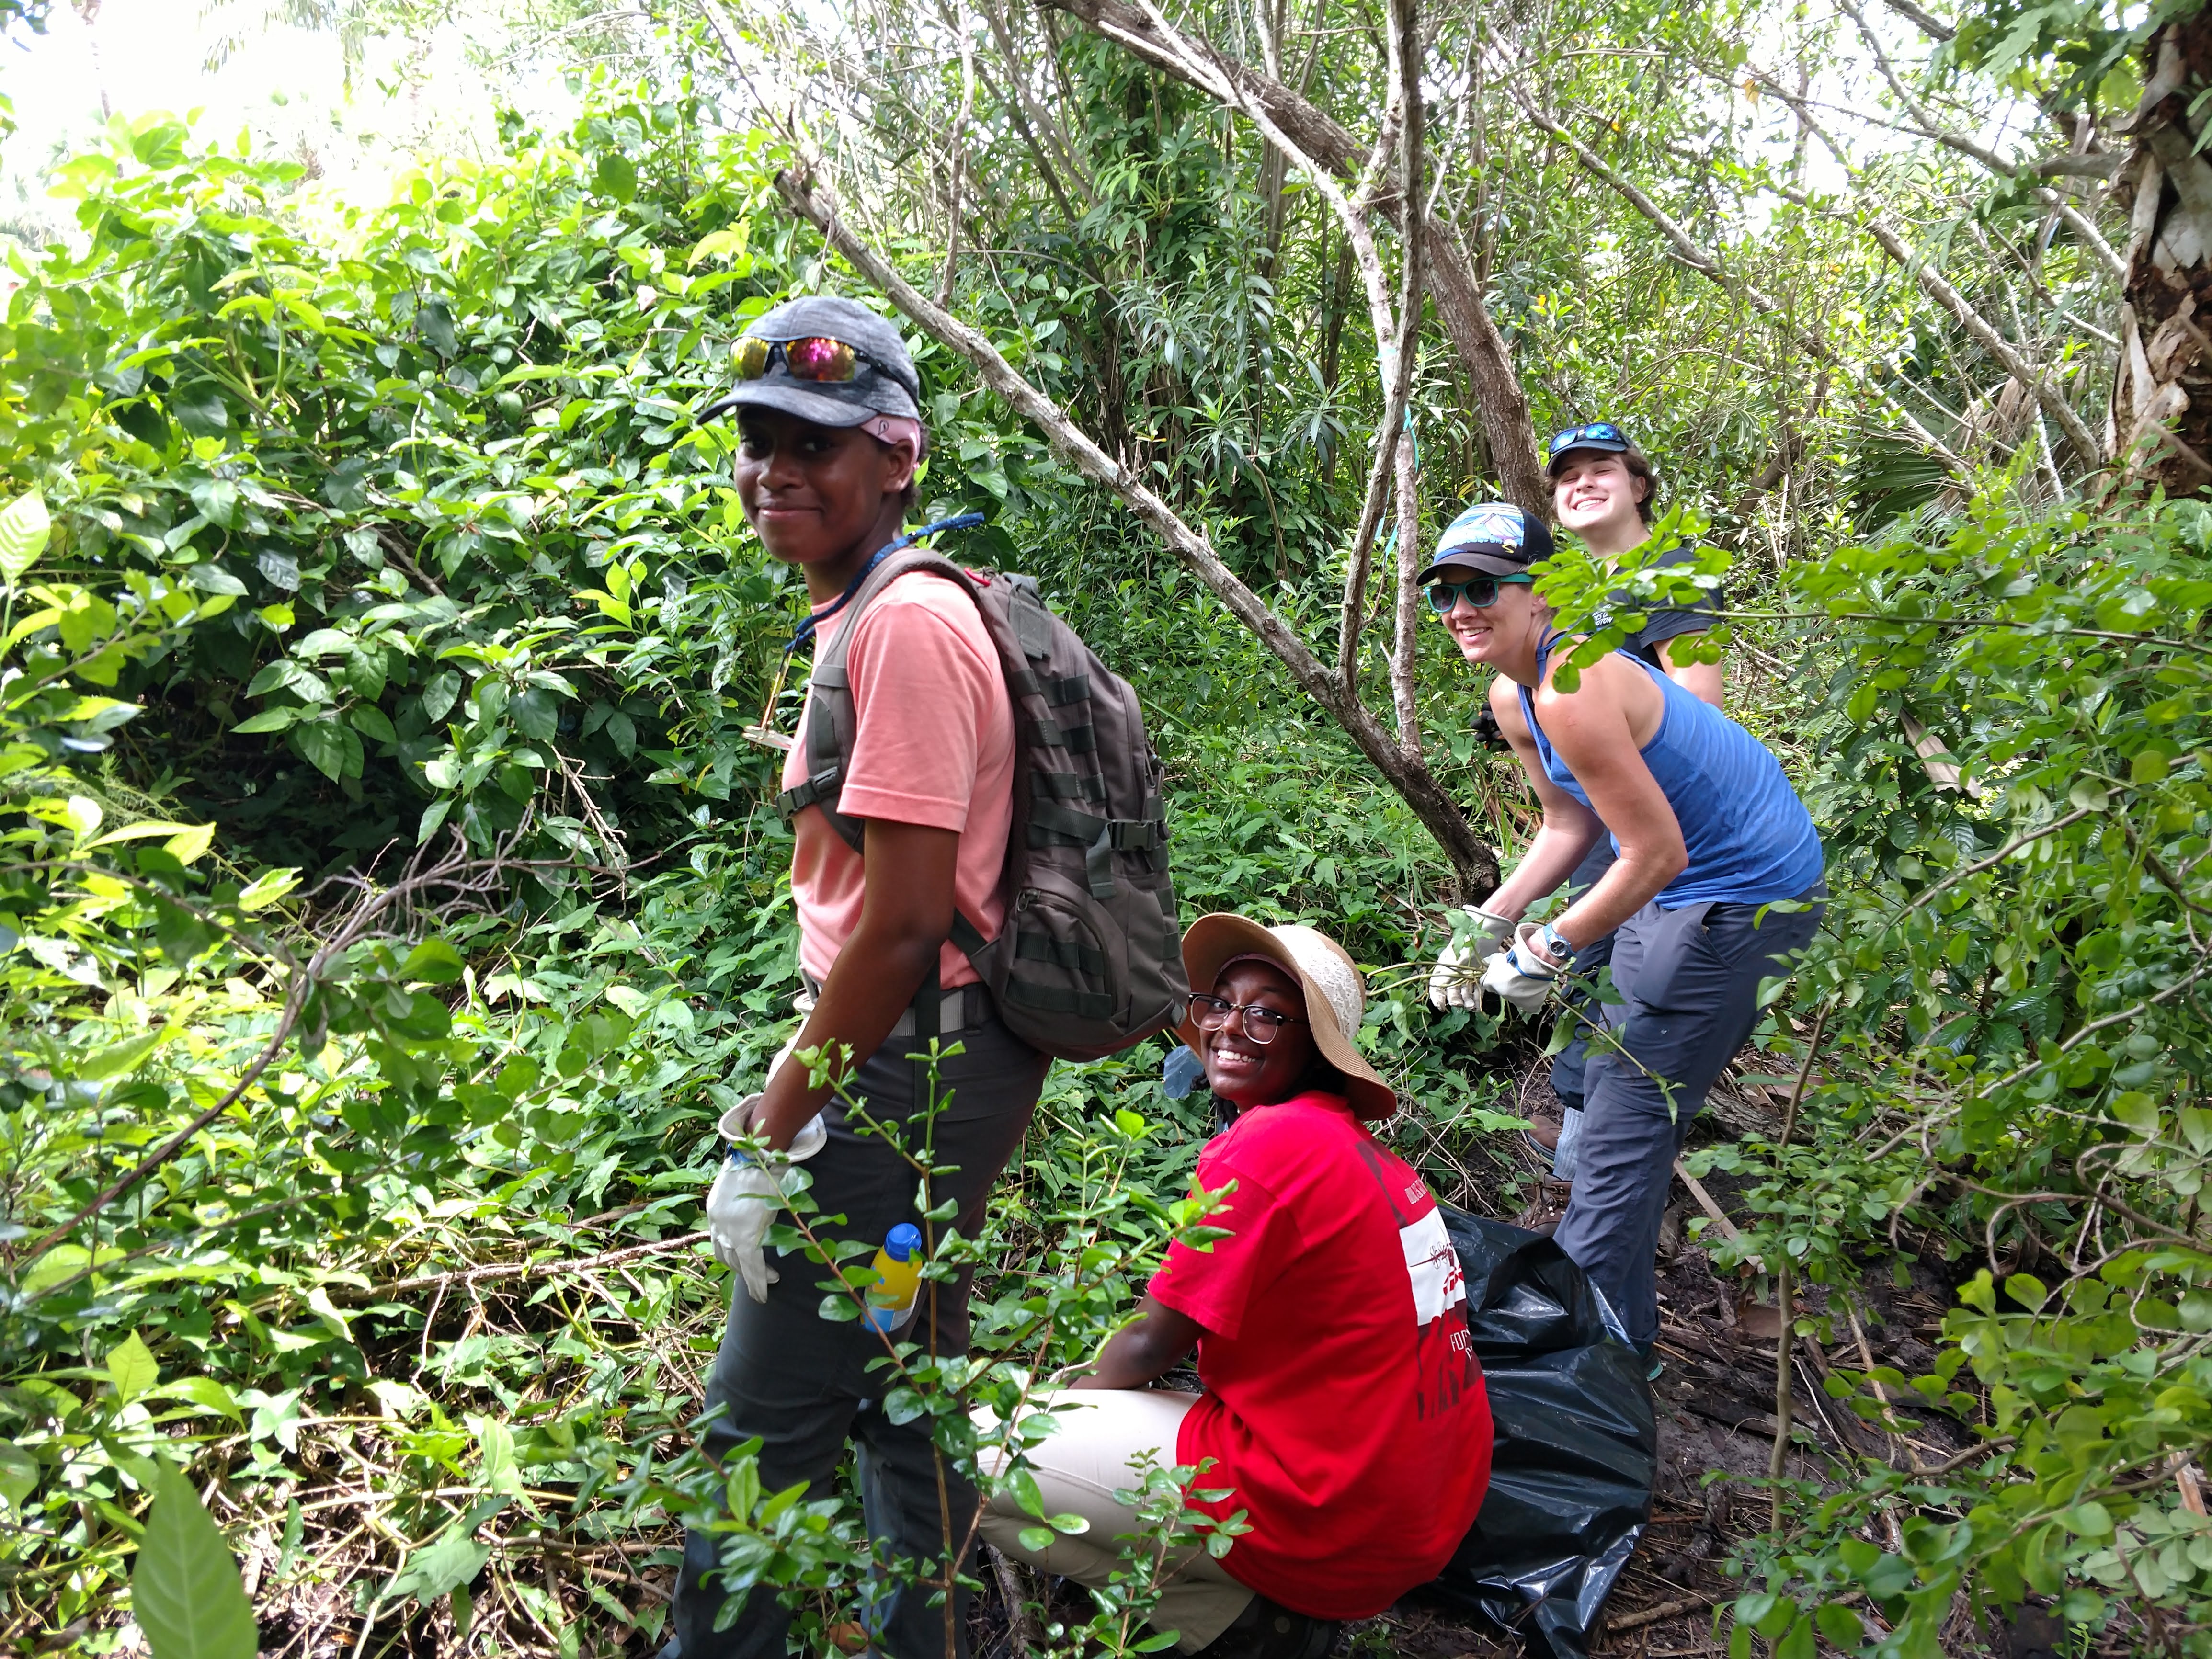 Volunteers remove invasive species from Blowing Rocks Preserve site.